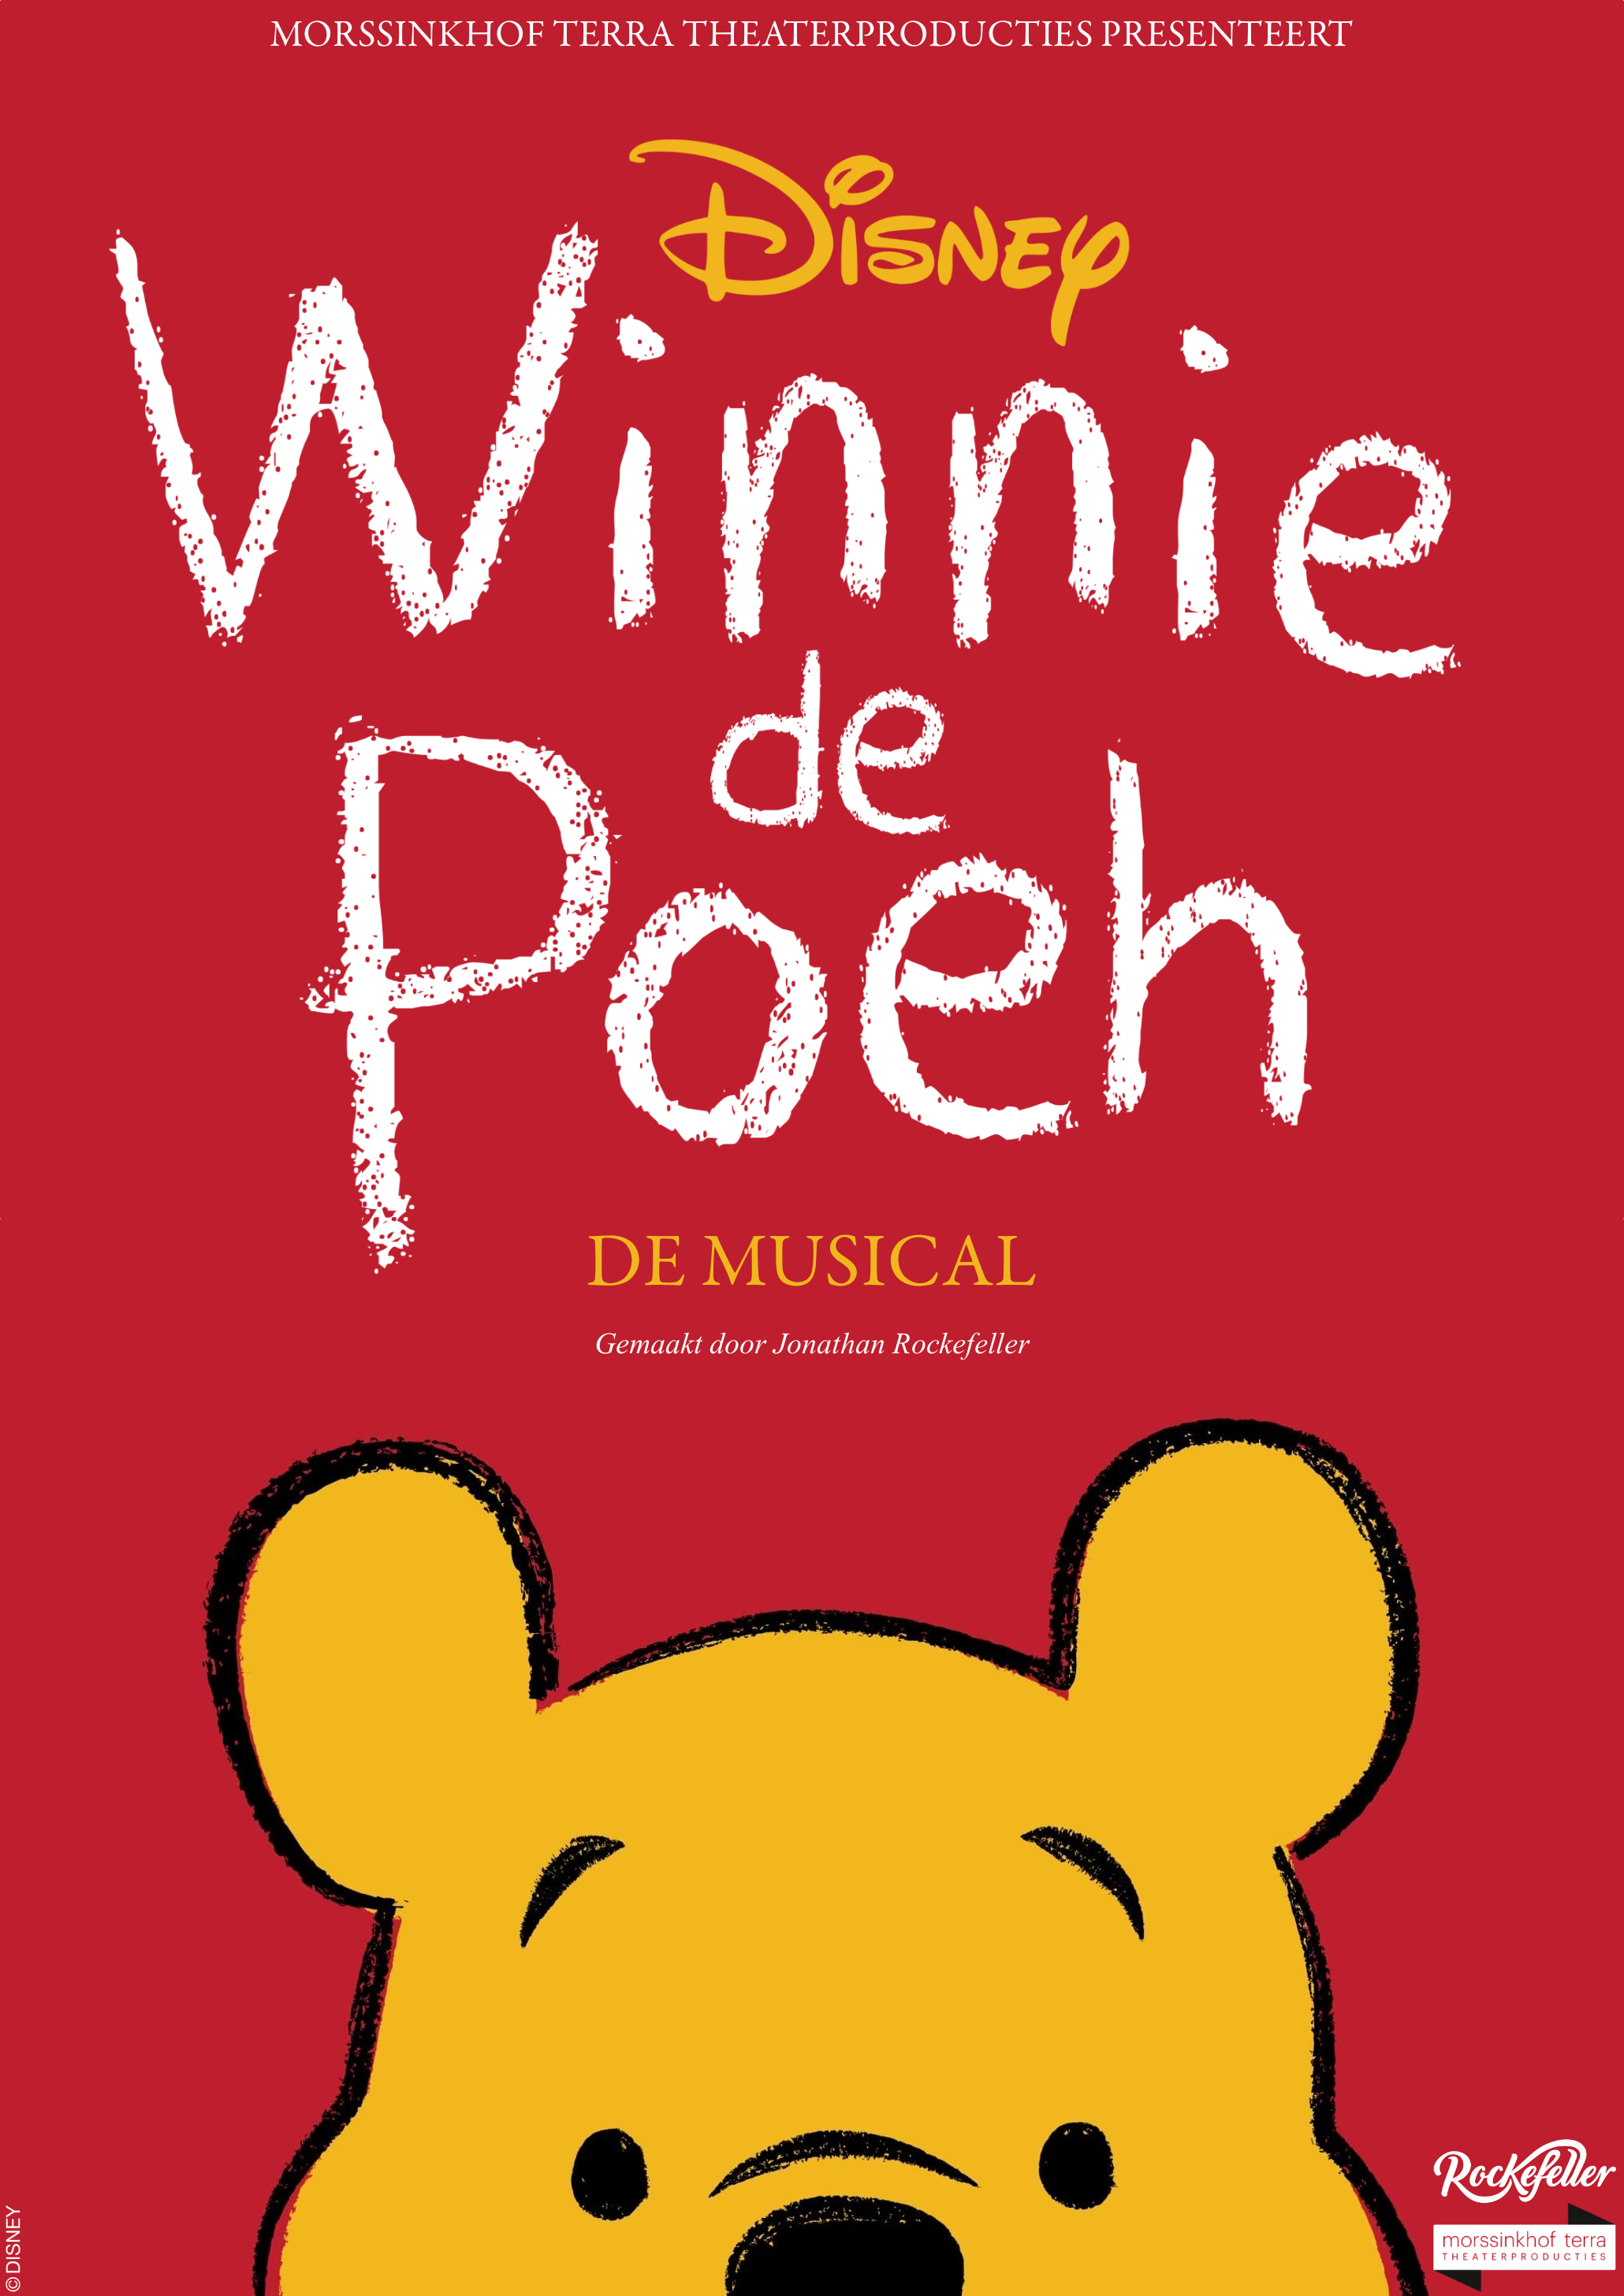 Disney’s Winnie de Poeh